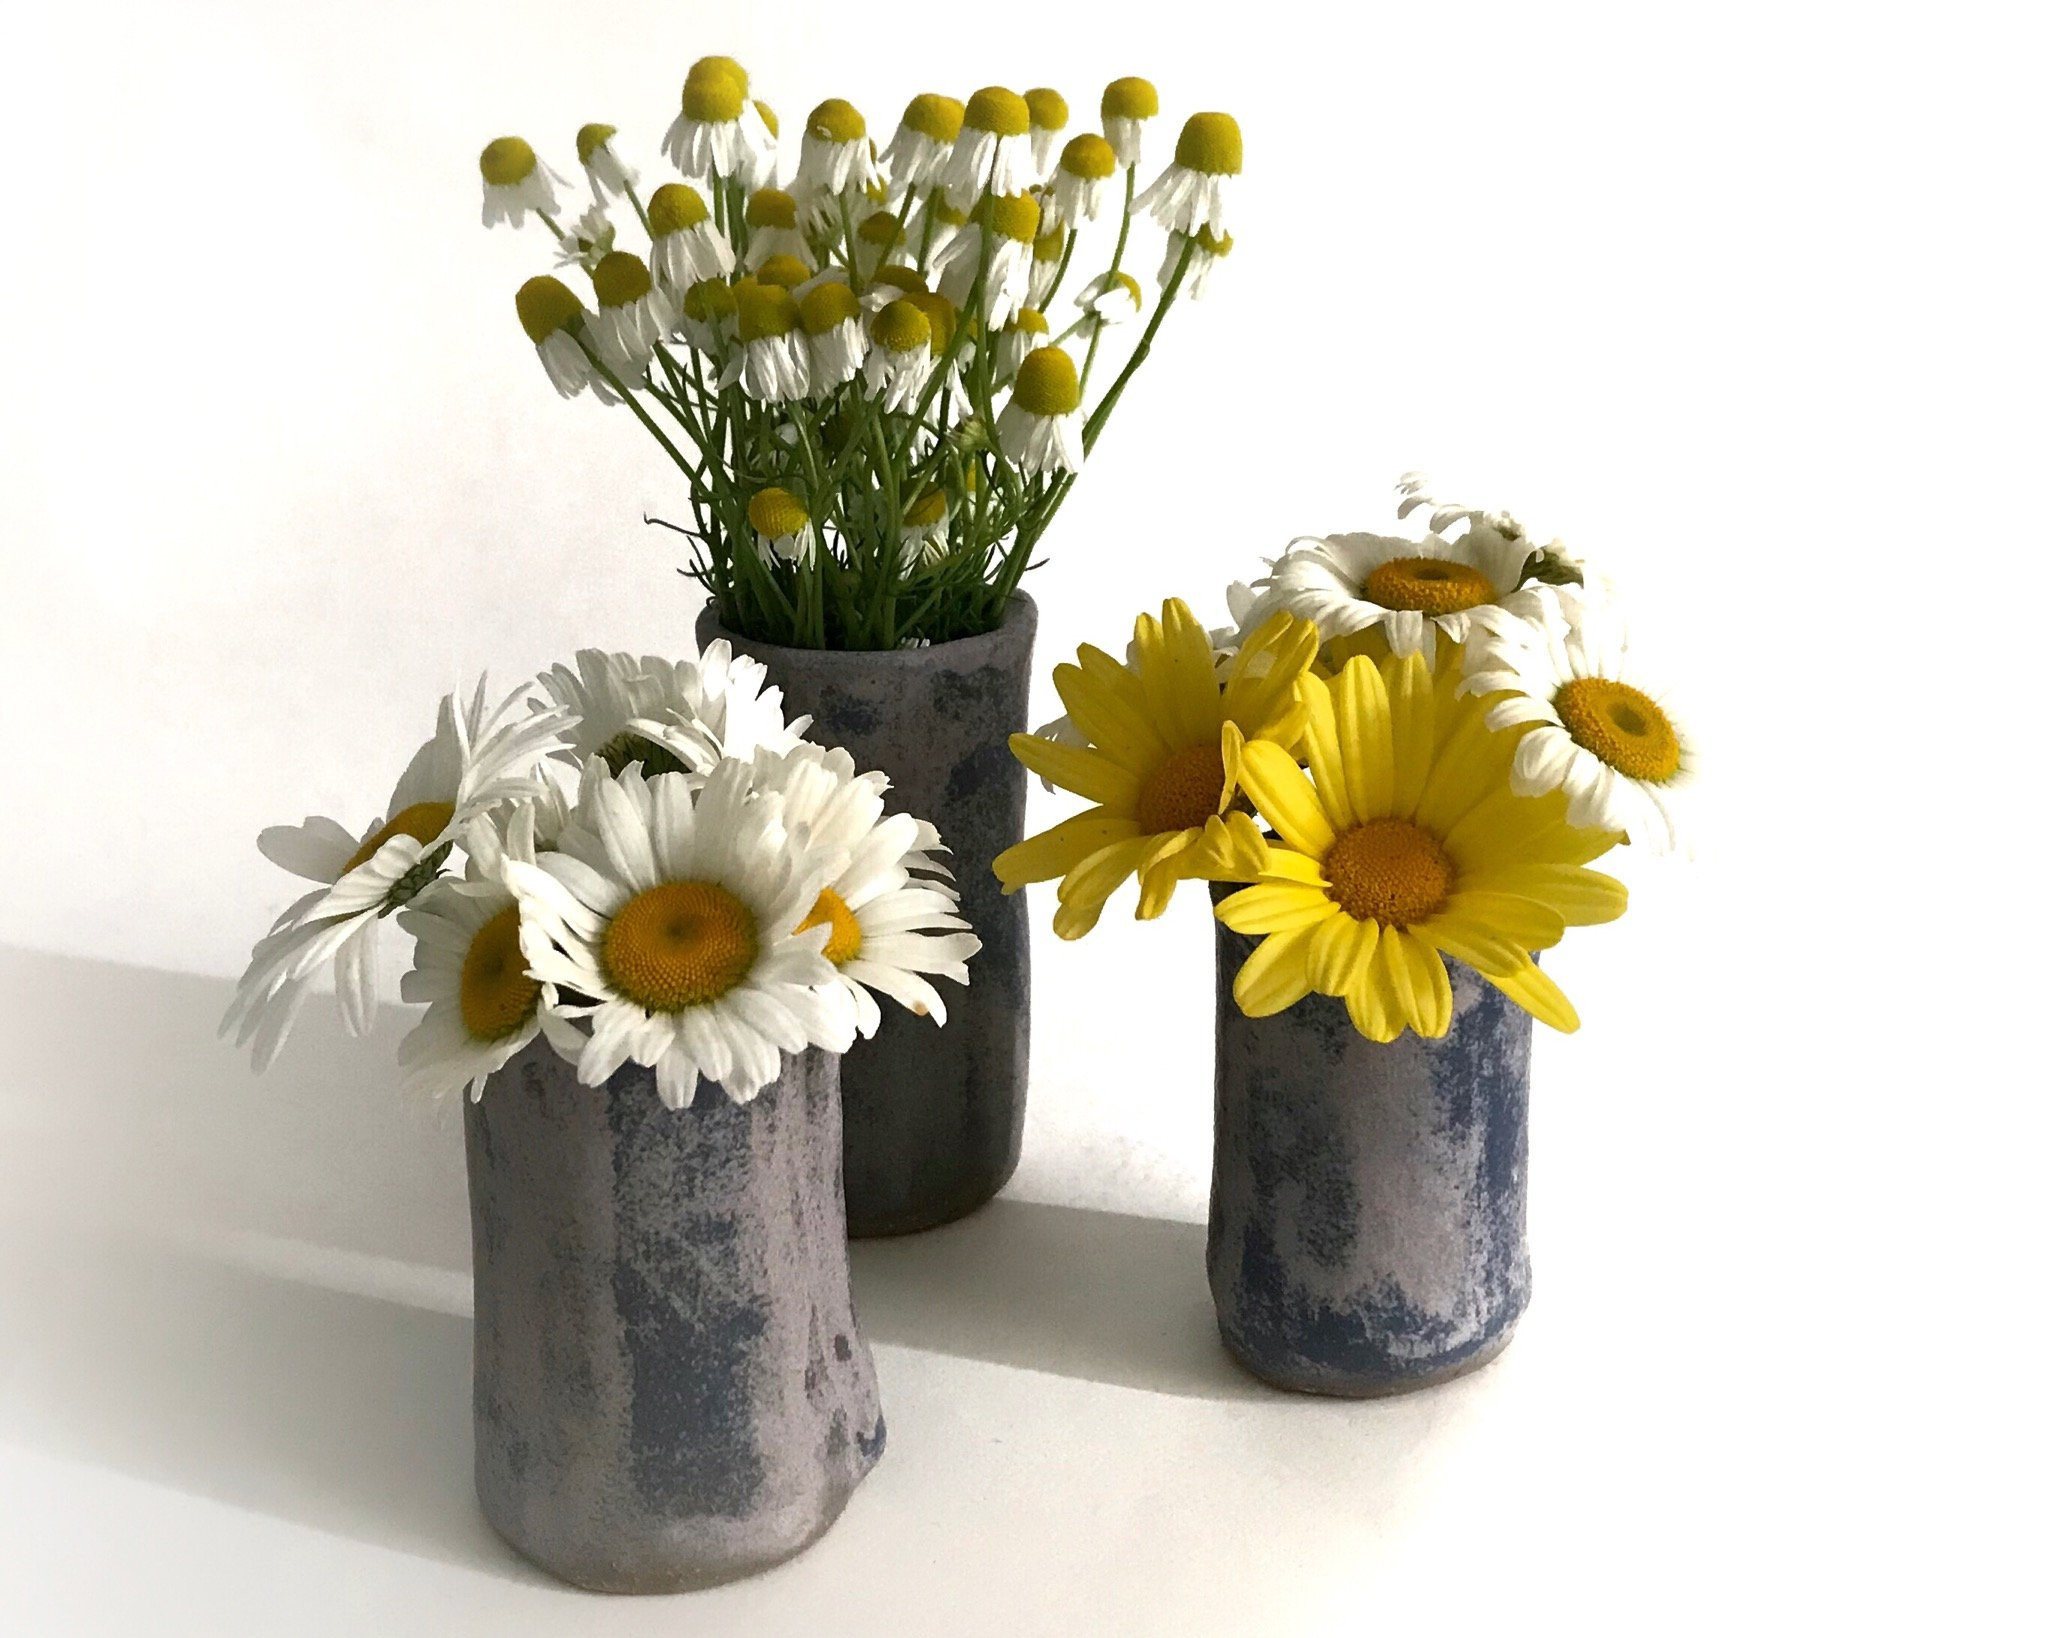 antique hyacinth vases for sale of ceramic bud vase set pottery flower vase fresh herb holder etsy pertaining to dzoom